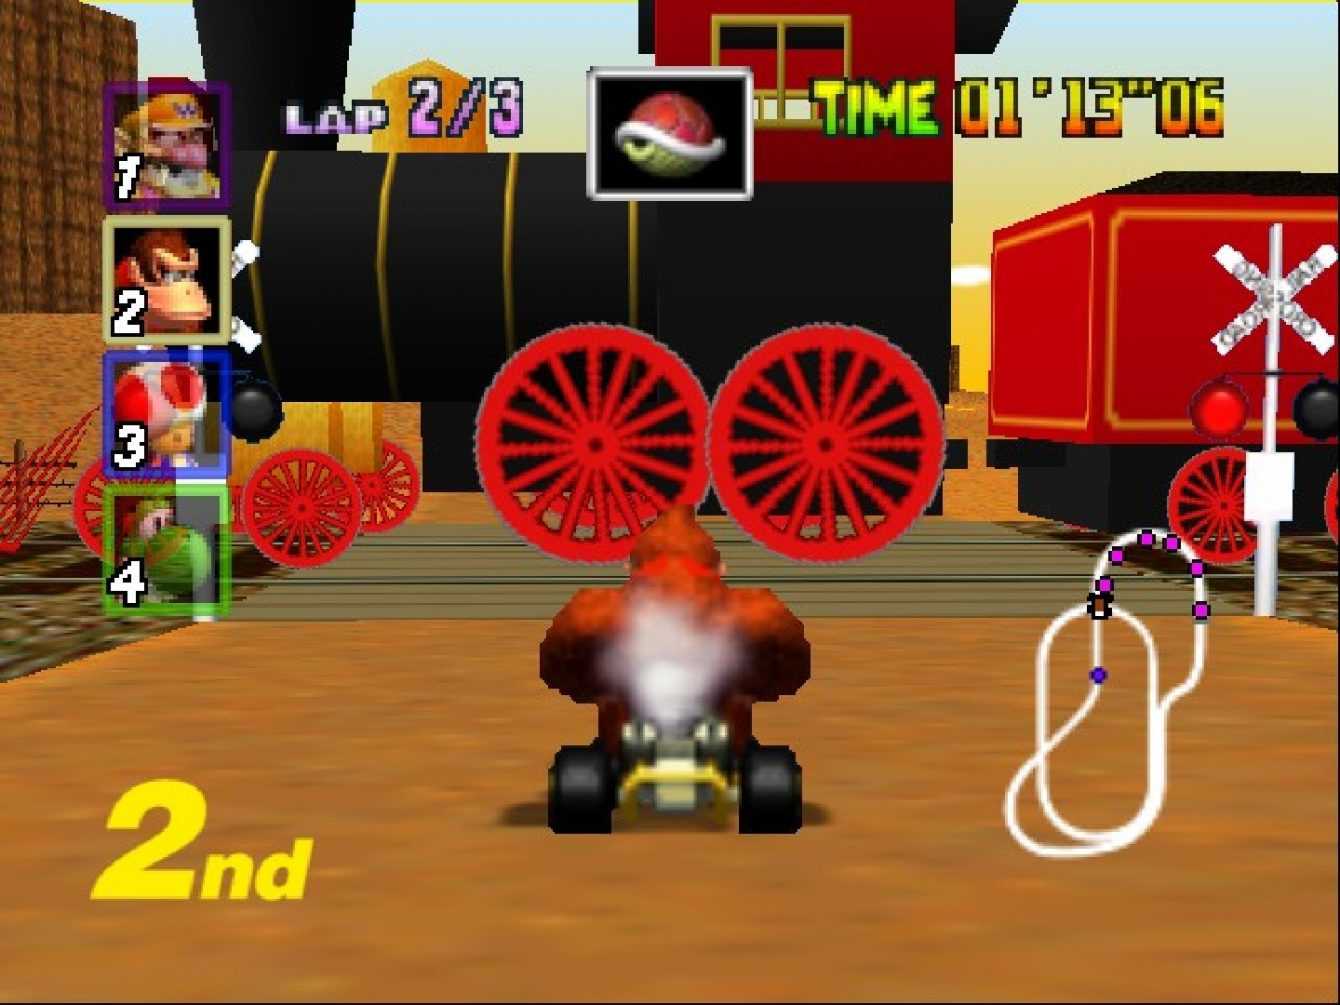 Retrogaming: 3D racing on Mario Kart 64